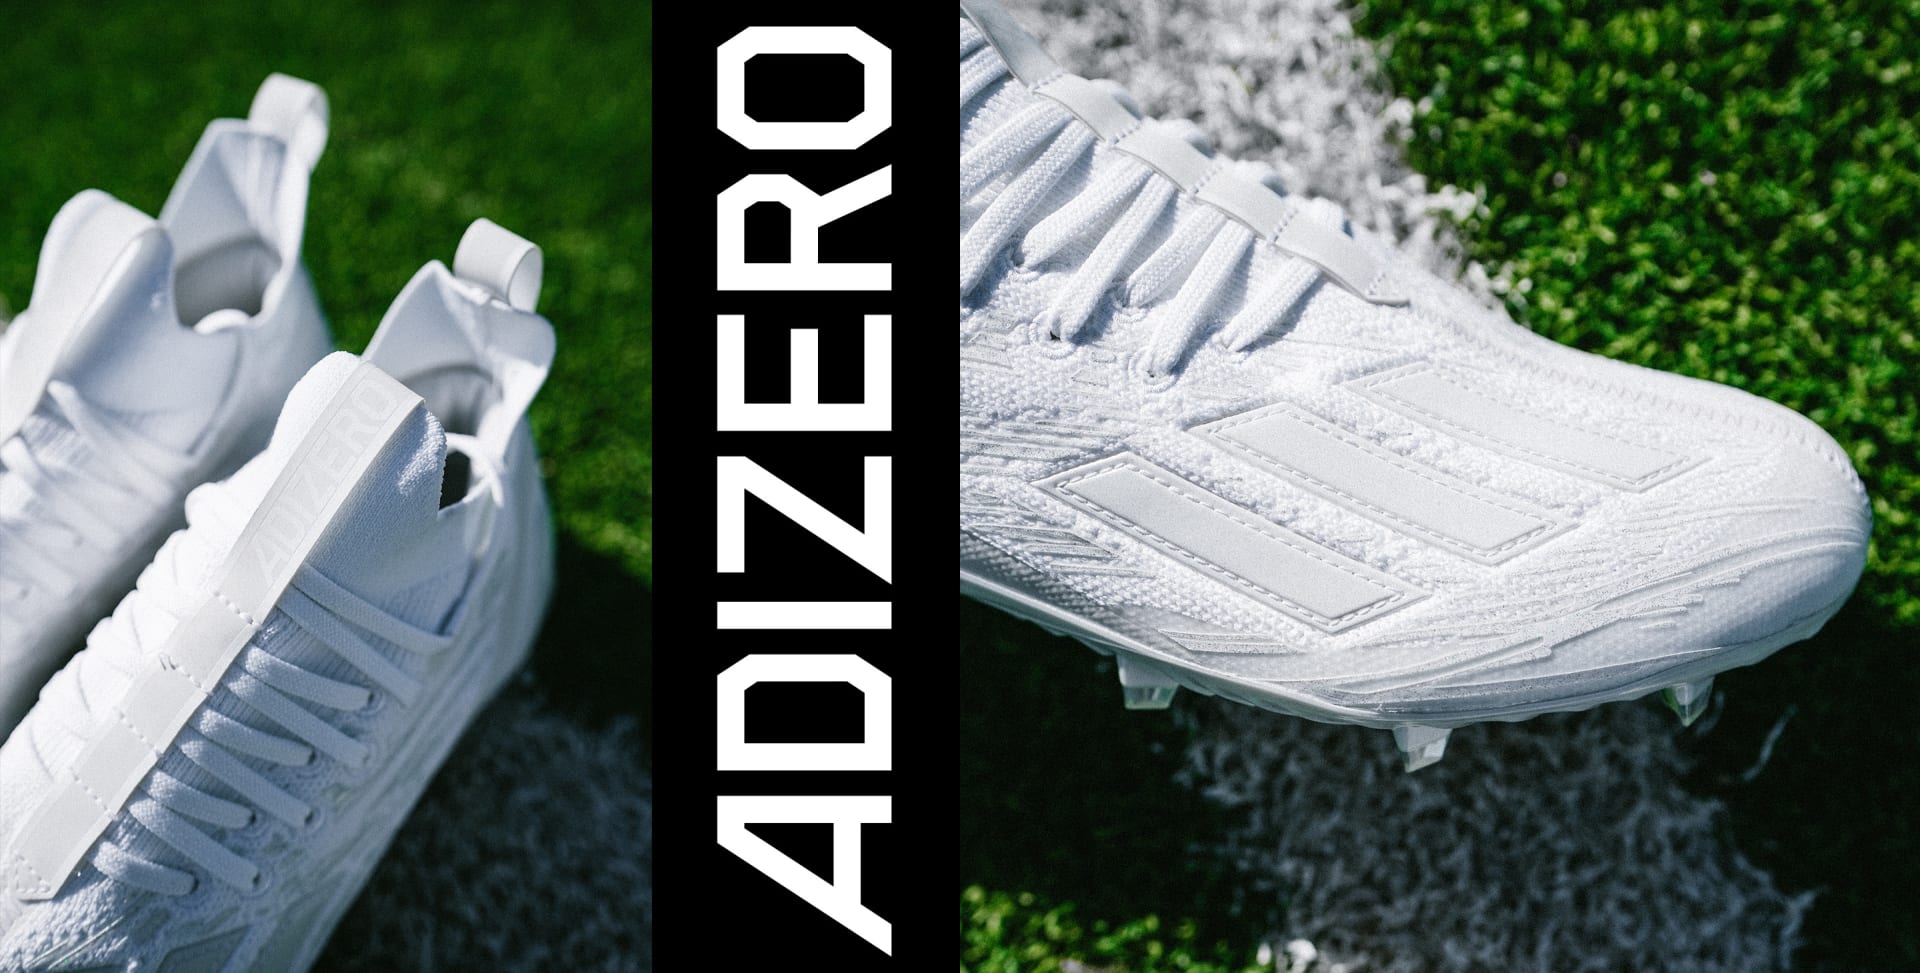 adidas Adizero Primeknit Cleats - White | Men's Football | adidas US